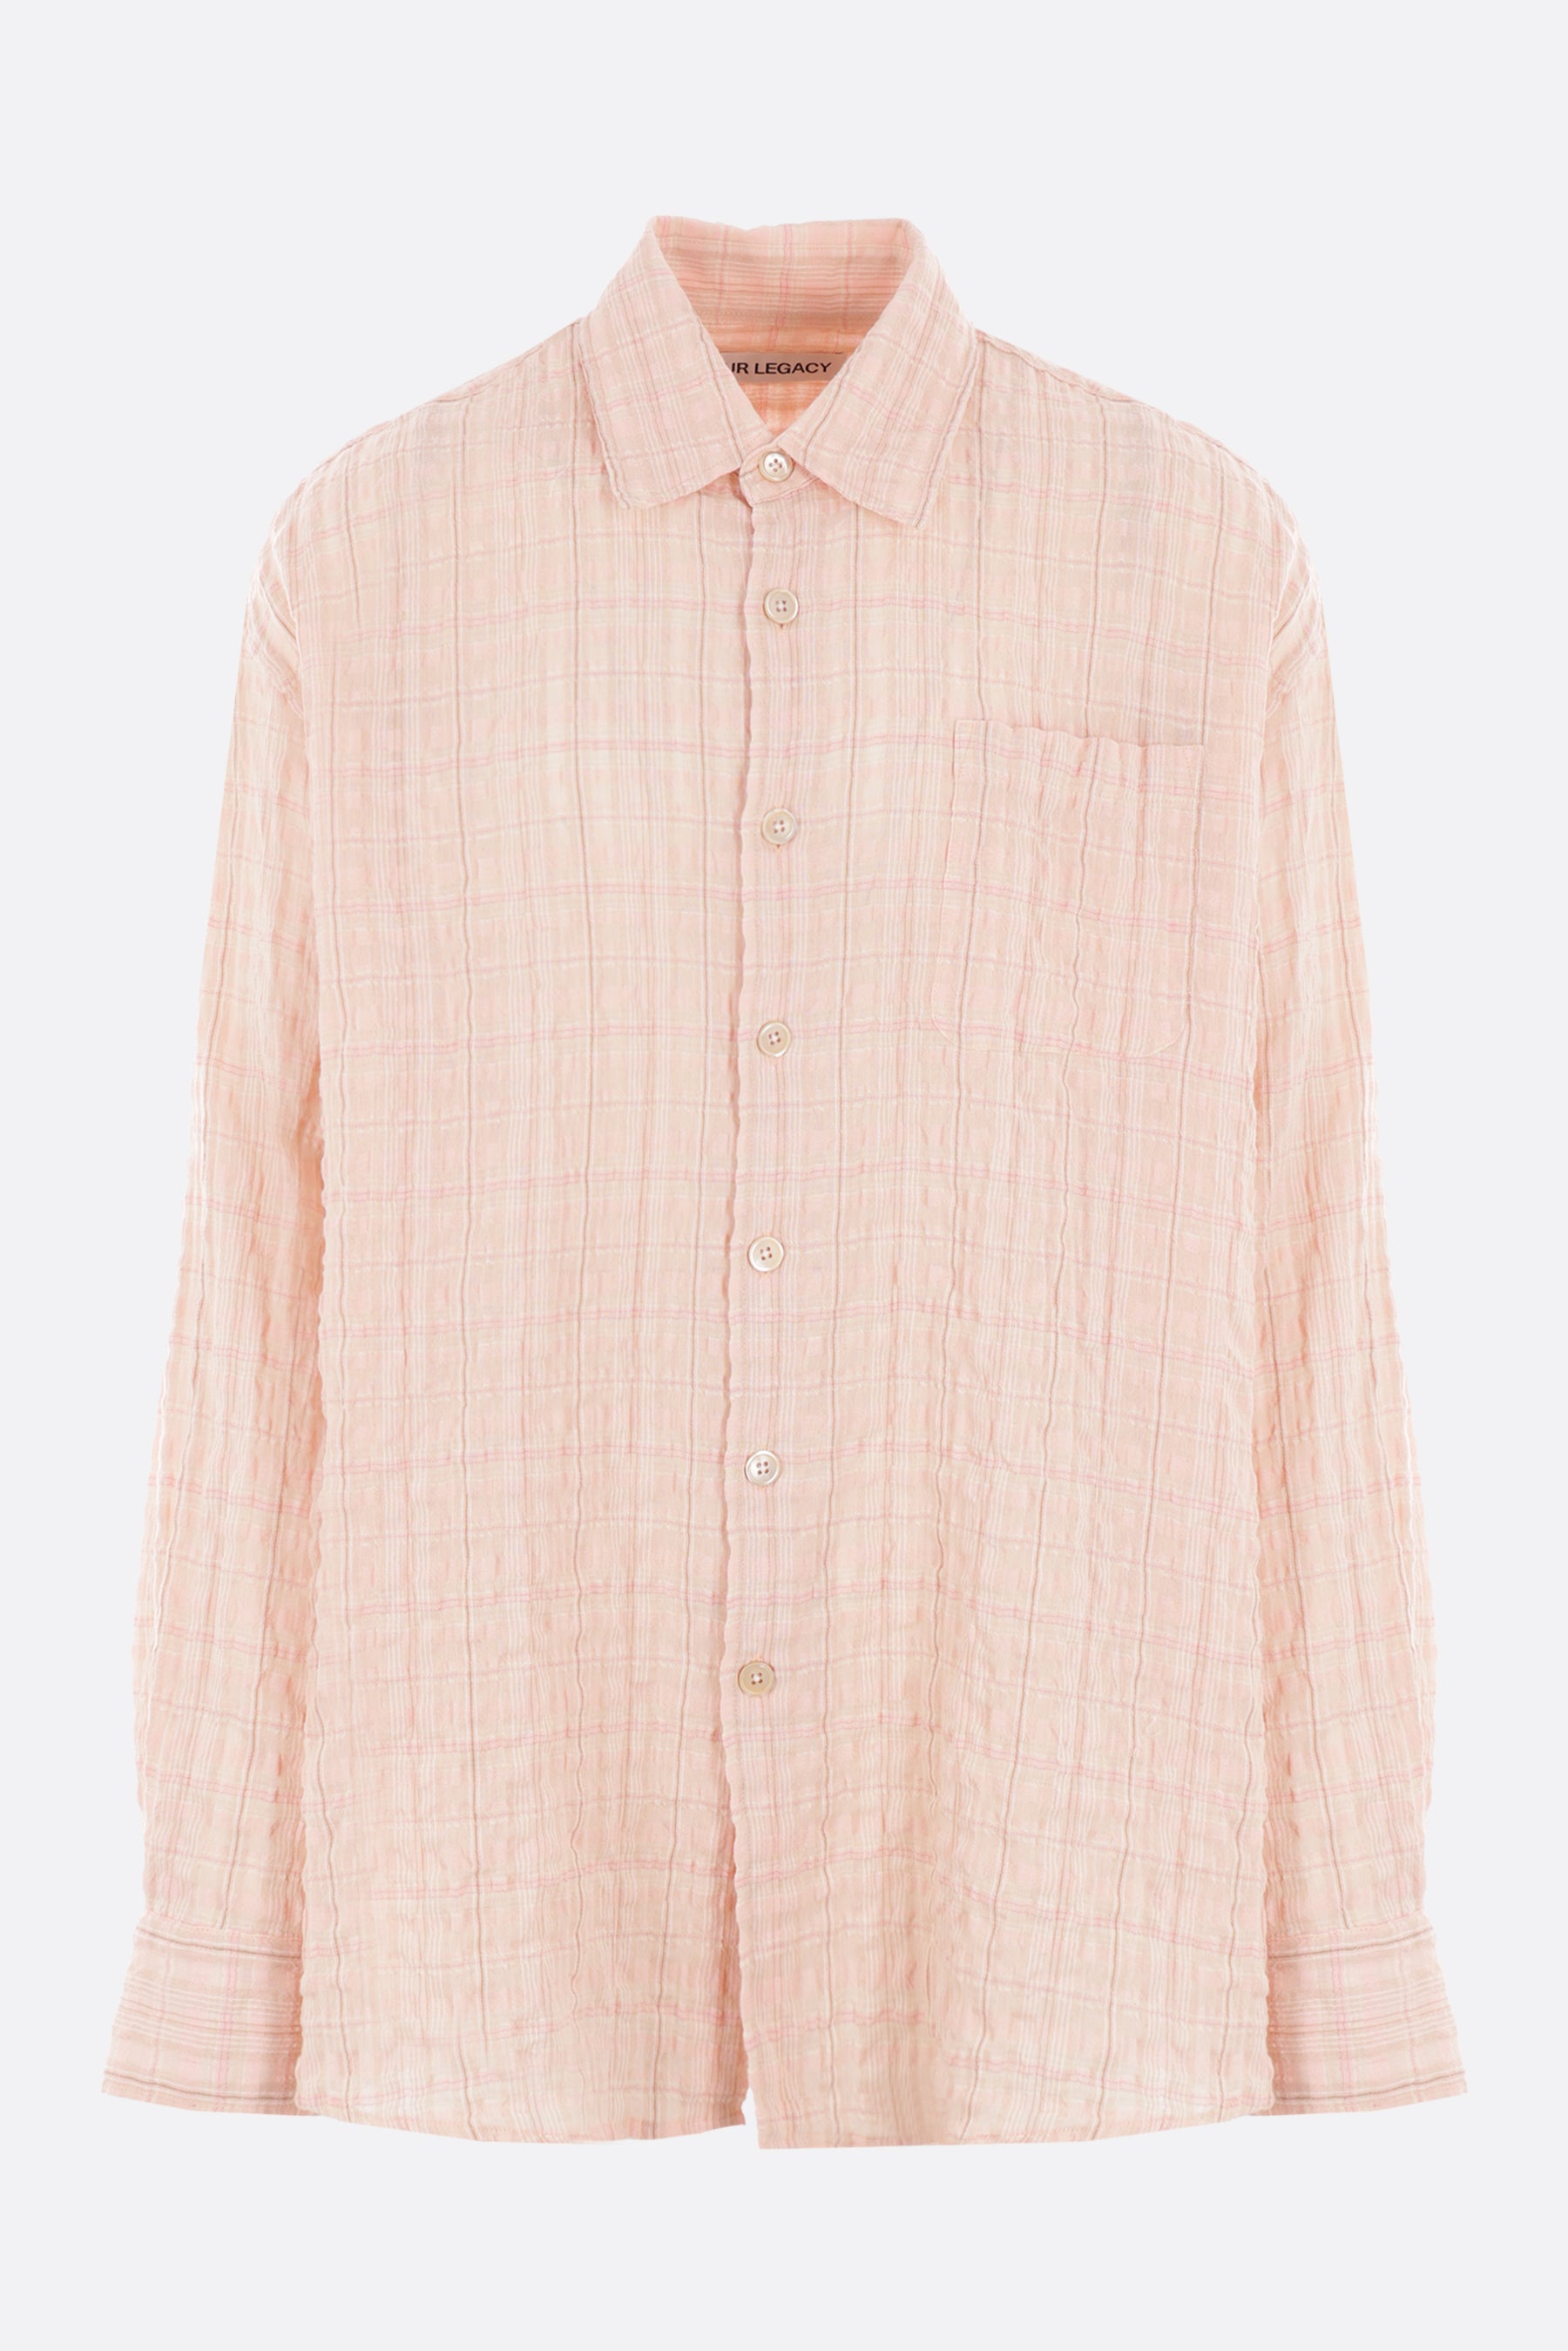 wrinkled cotton blend Borrowed shirt